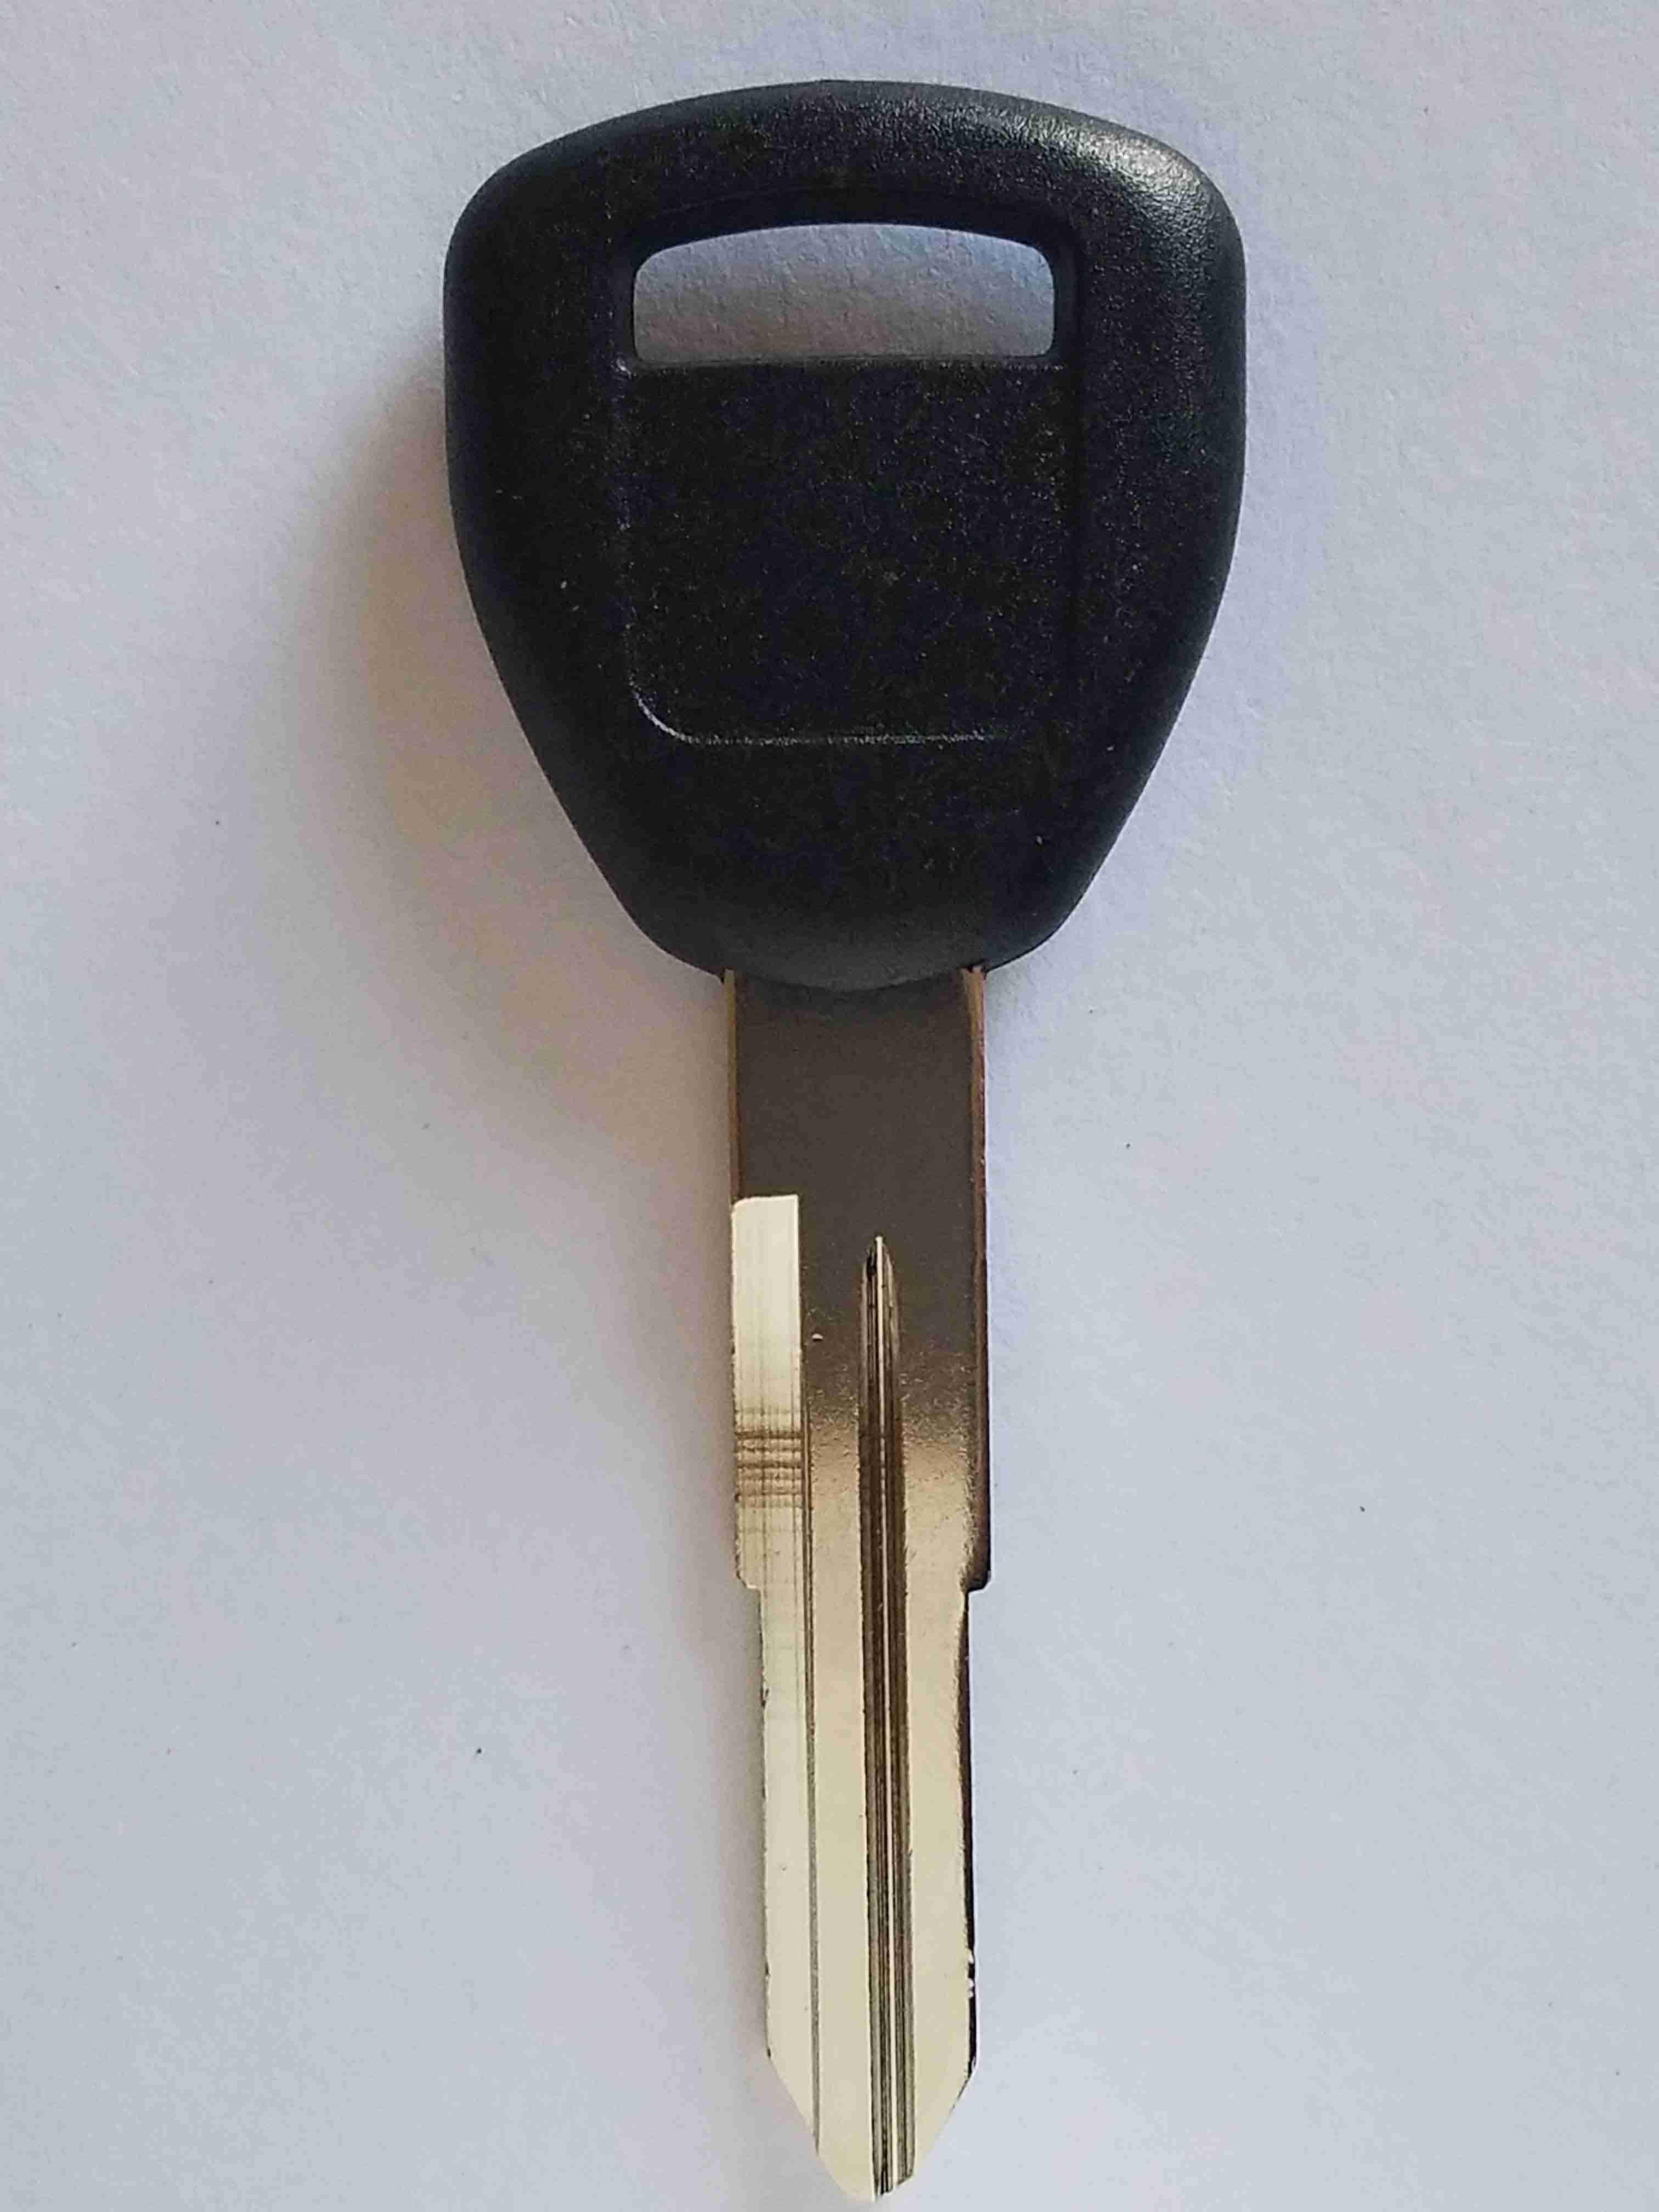 Honda transponder key